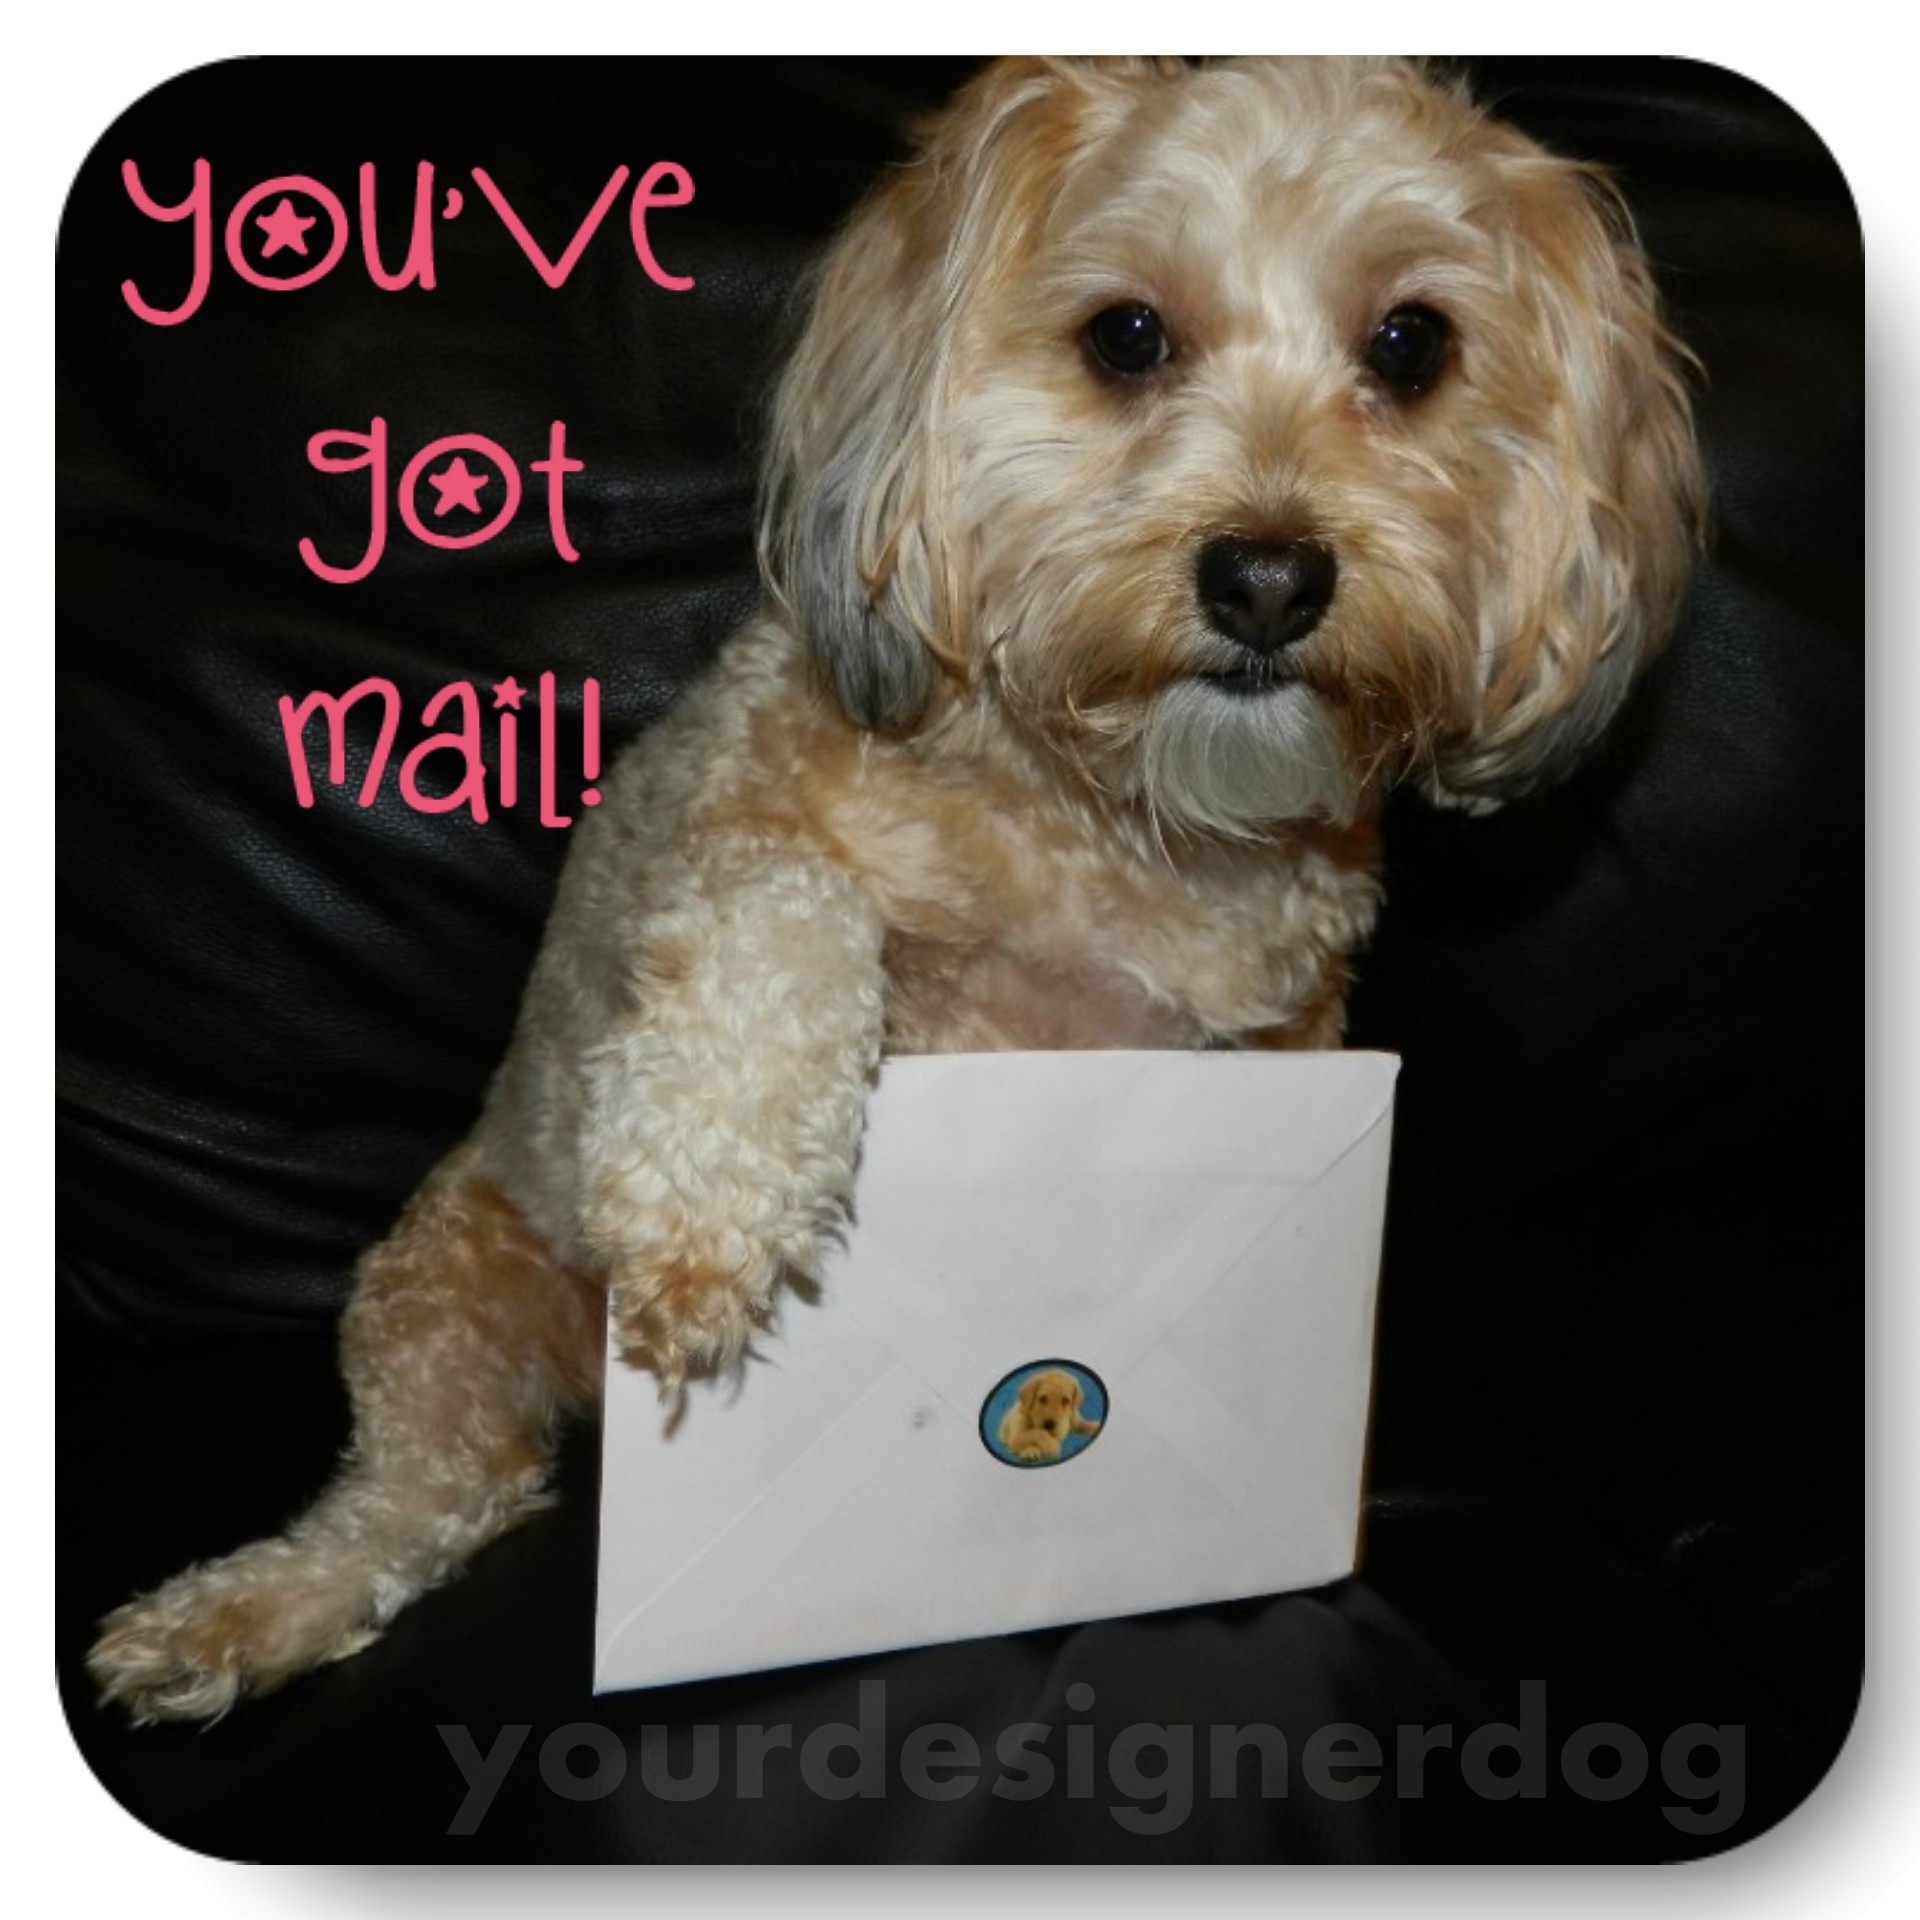 dogs, designer dogs, yorkipoo, yorkie poo, email, envelope